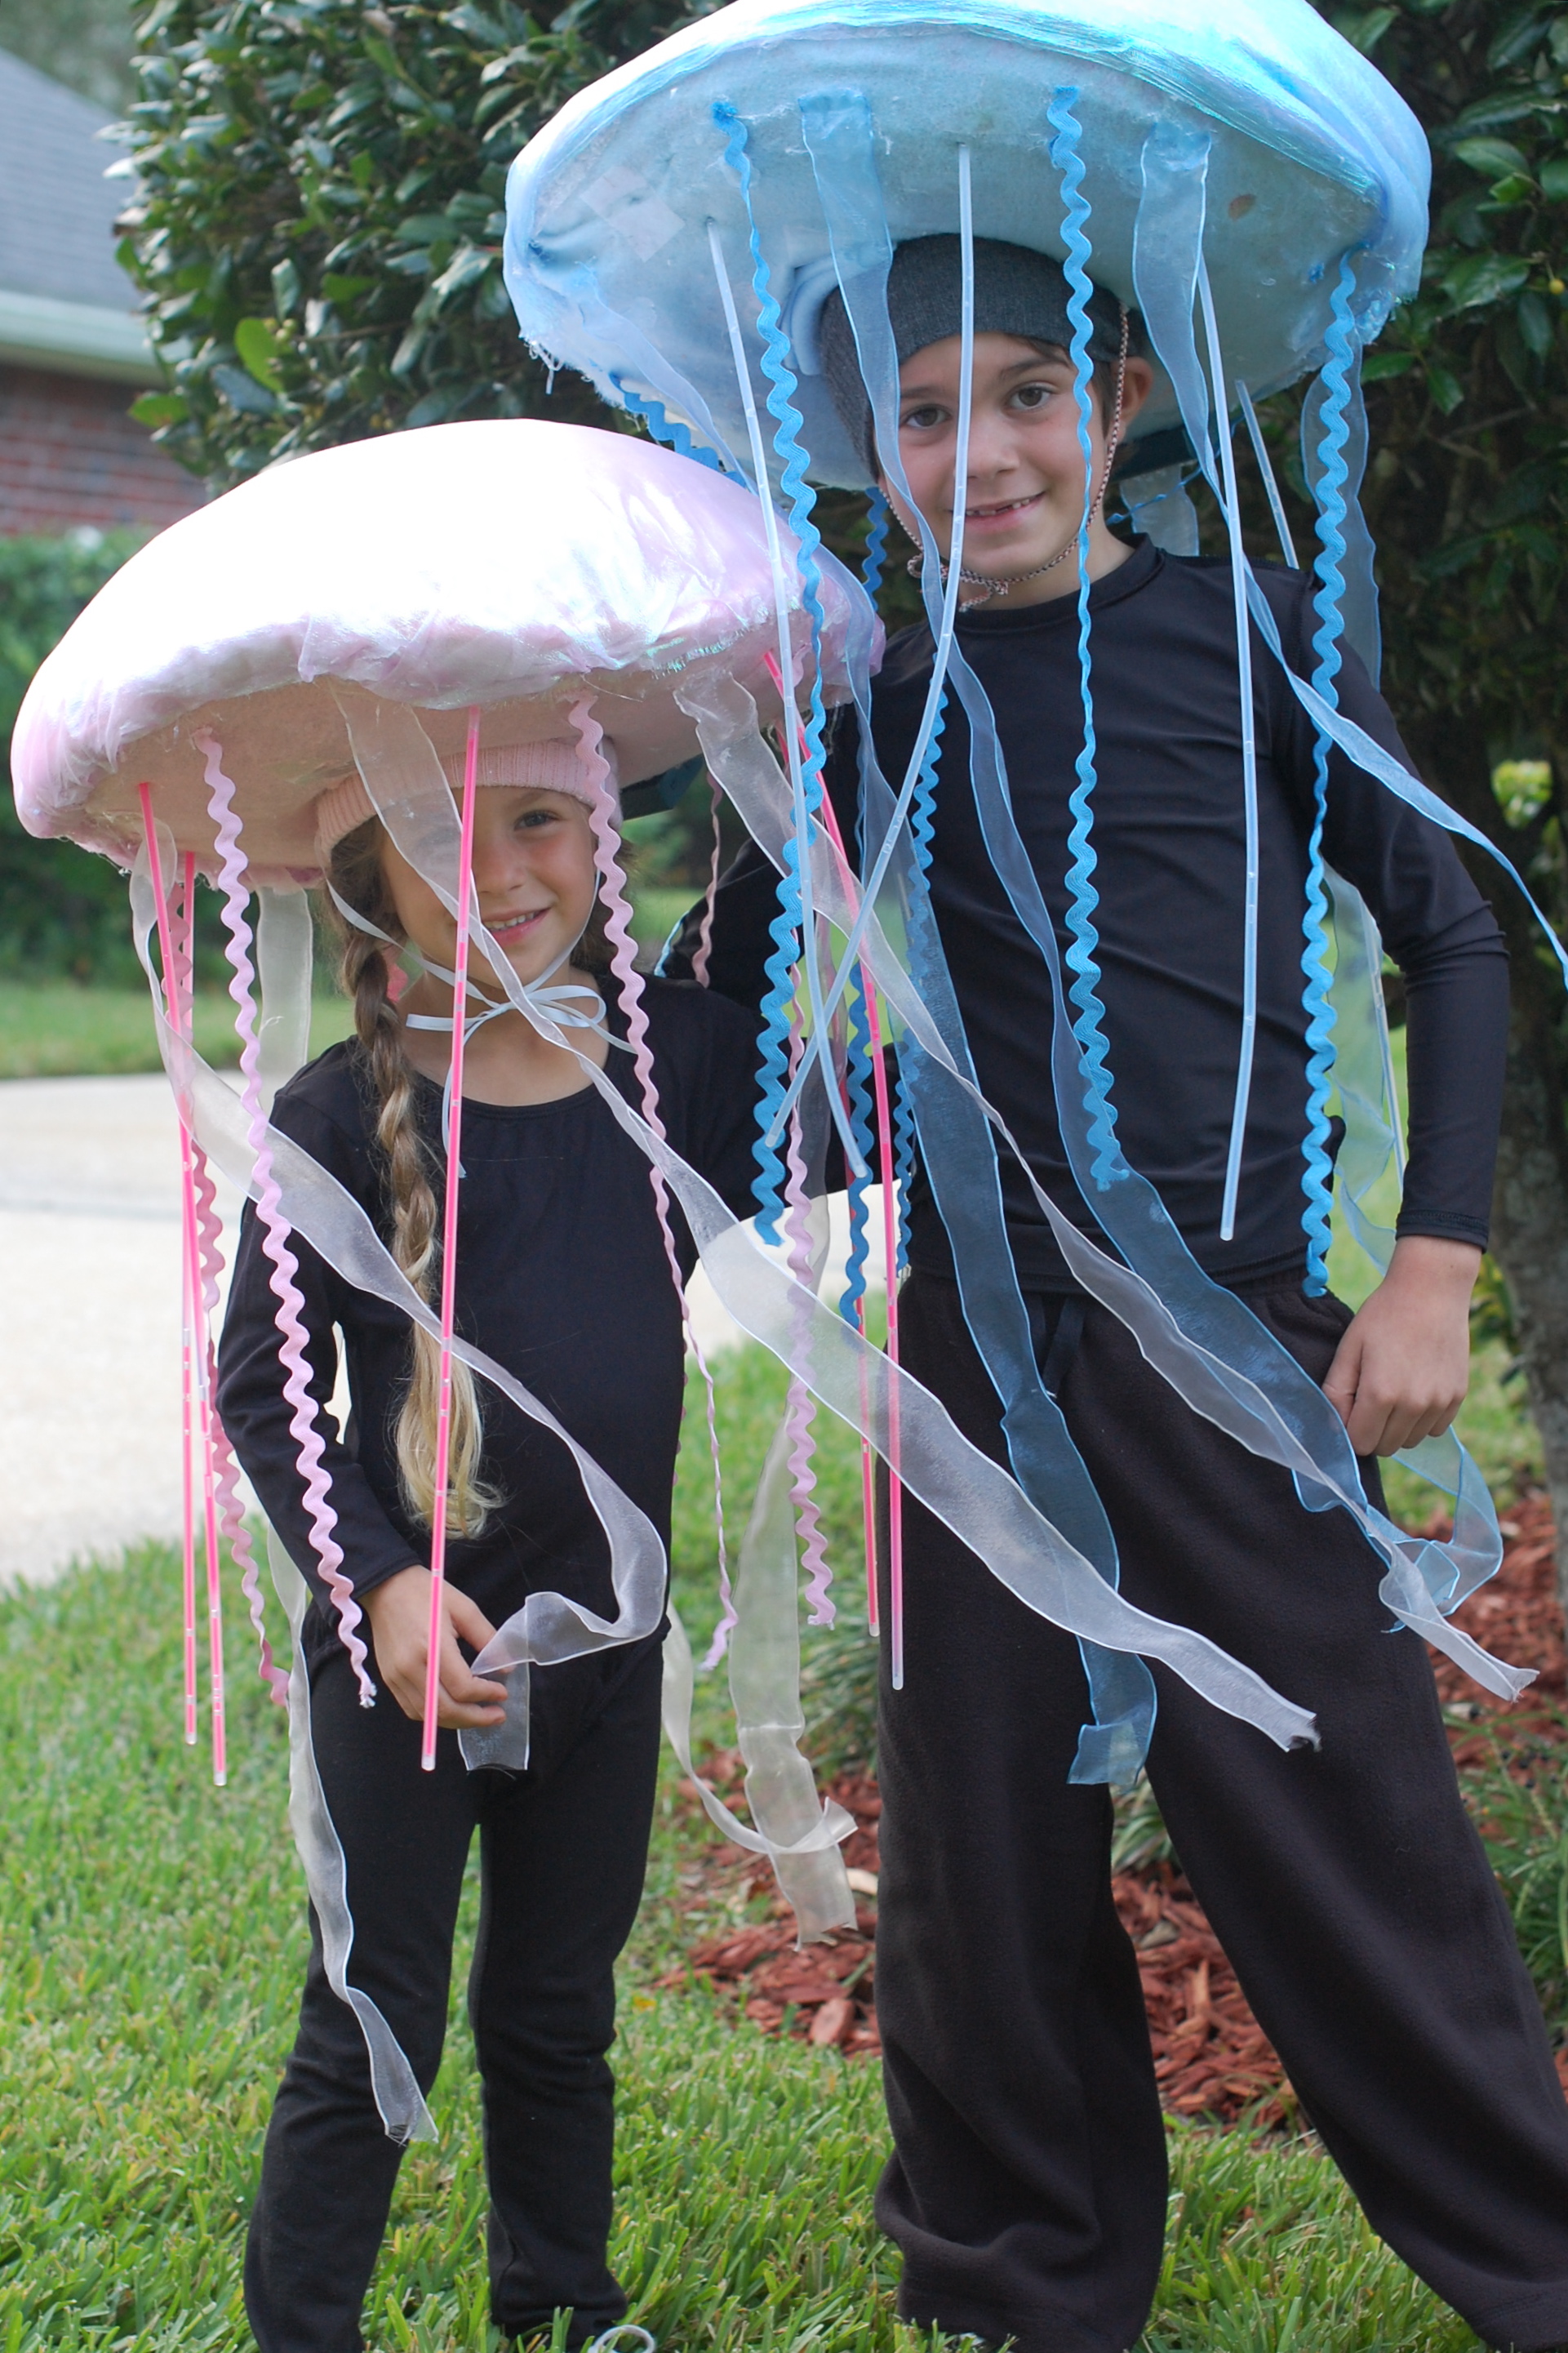 Jelly Fish Costume  Fish costume, Jellyfish costume, Jellyfish